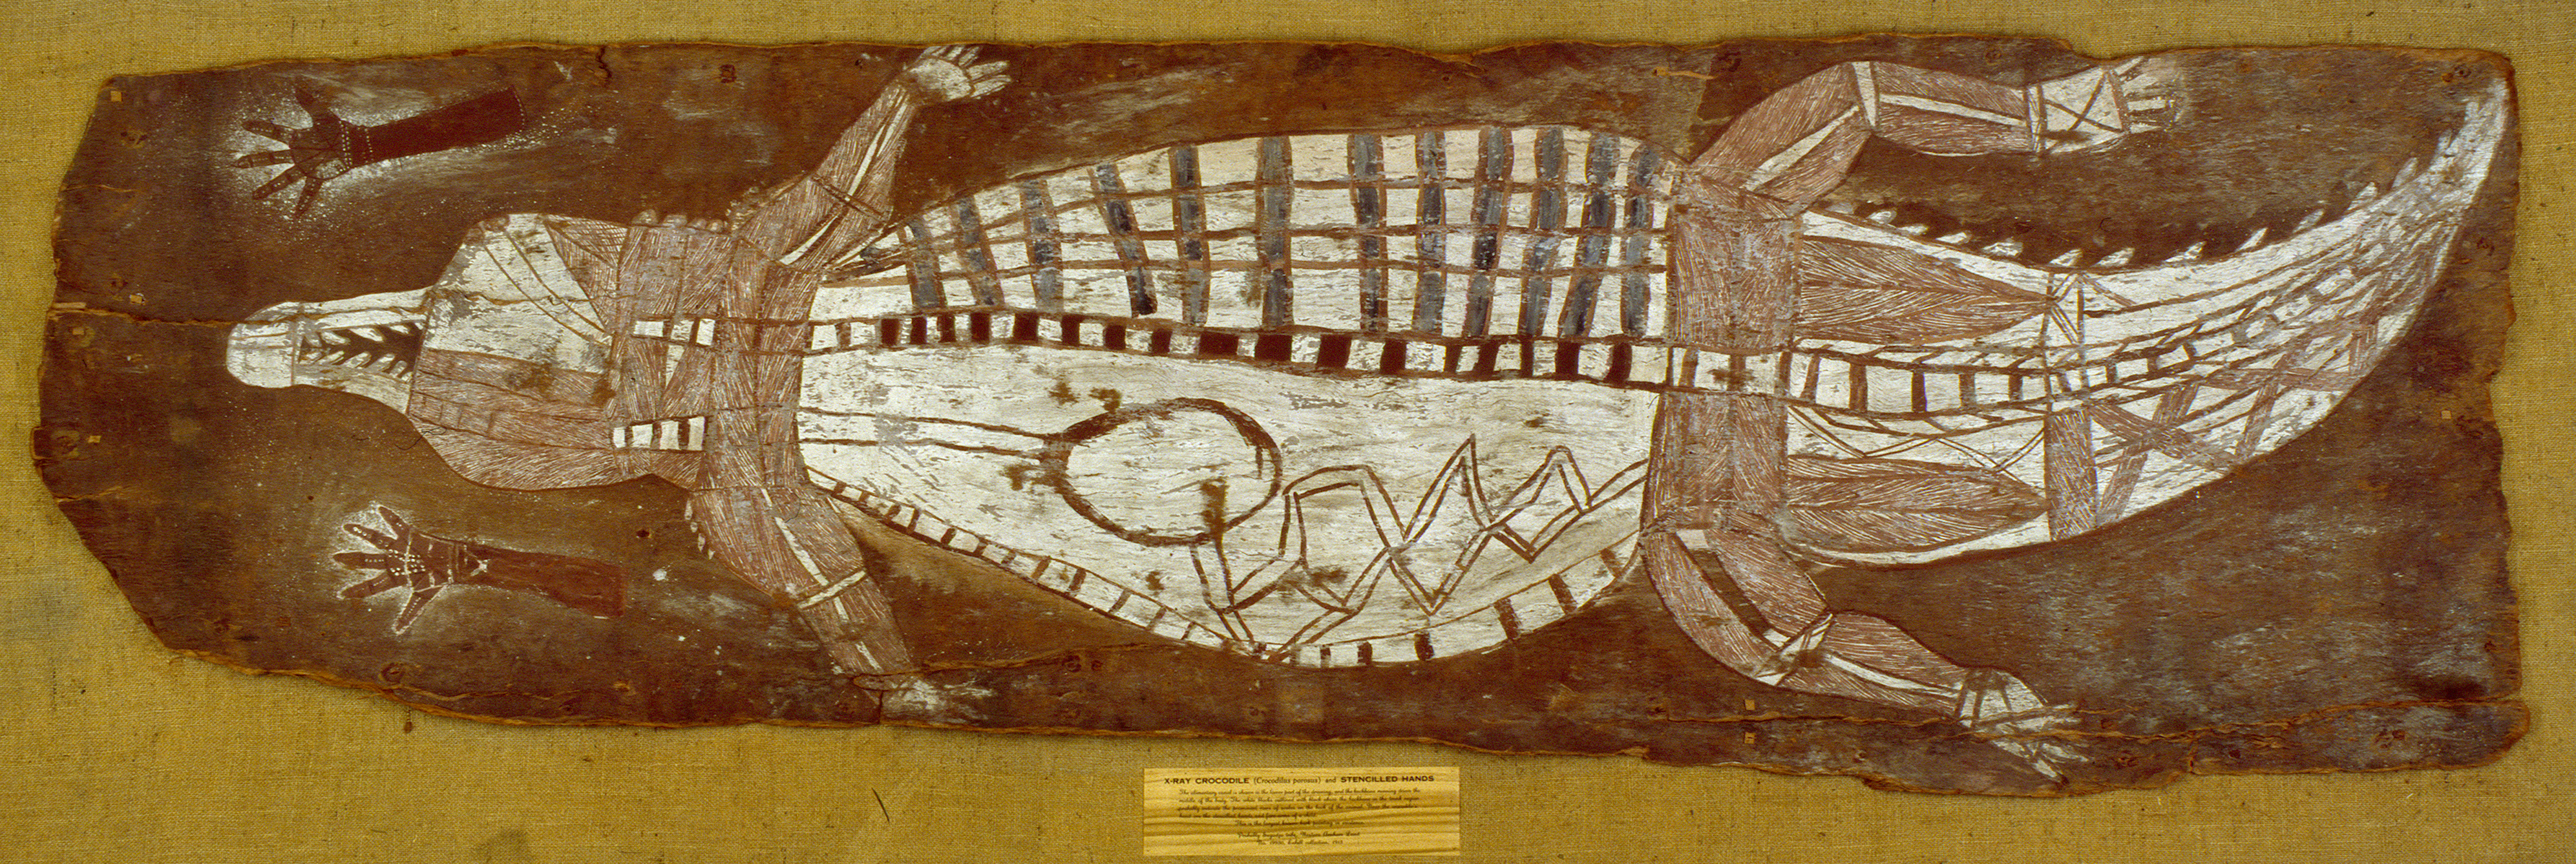 A piece of Indigenous bark art depicting a crocodile